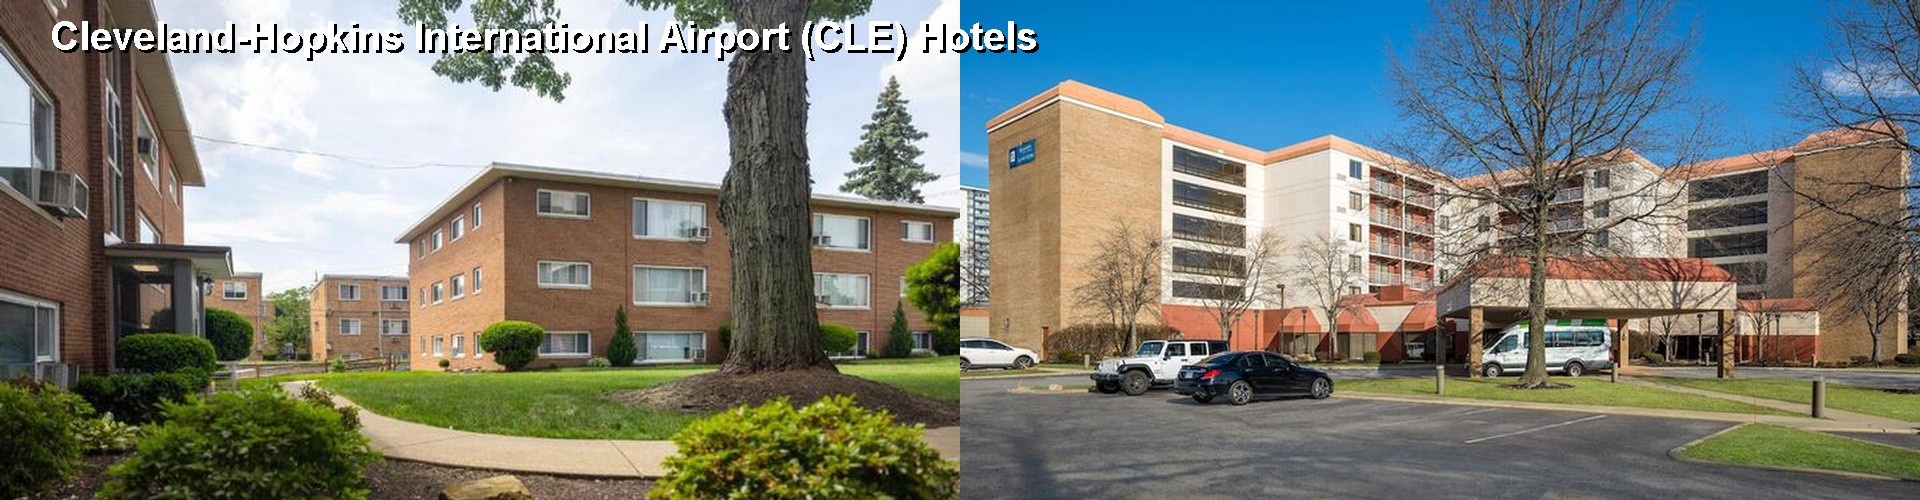 5 Best Hotels near Cleveland-Hopkins International Airport (CLE)